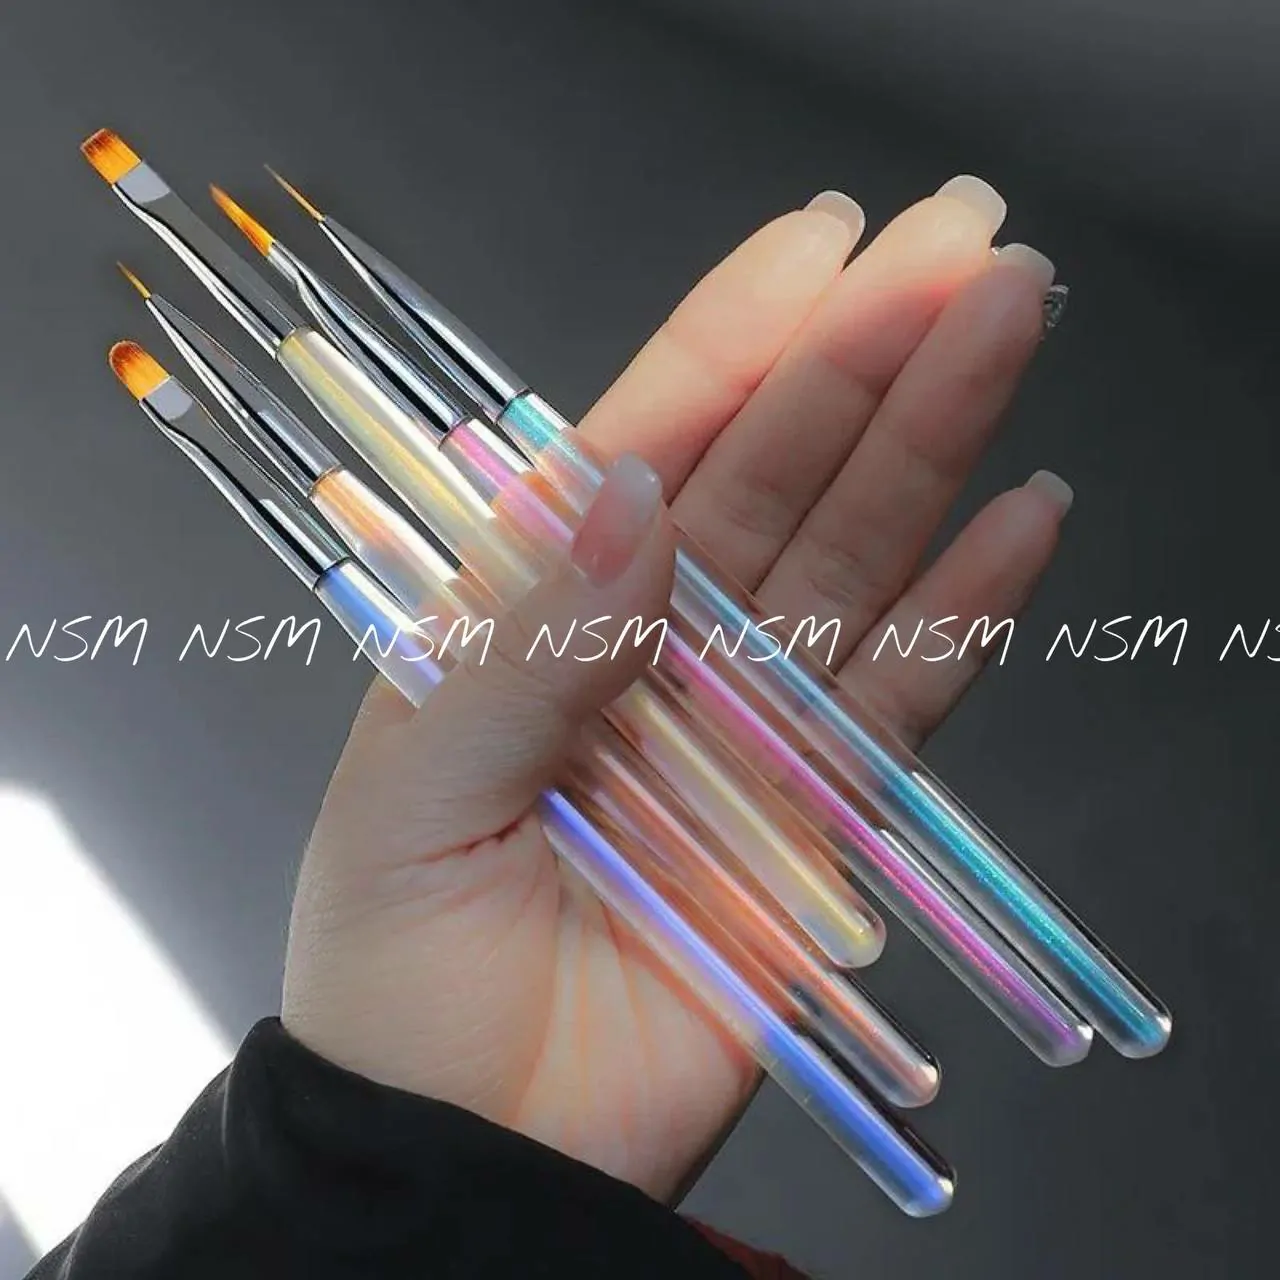 Striper Nail Brush|acrylic Nail Art Brush Set 7-piece - 100% Nylon Manicure  Tools